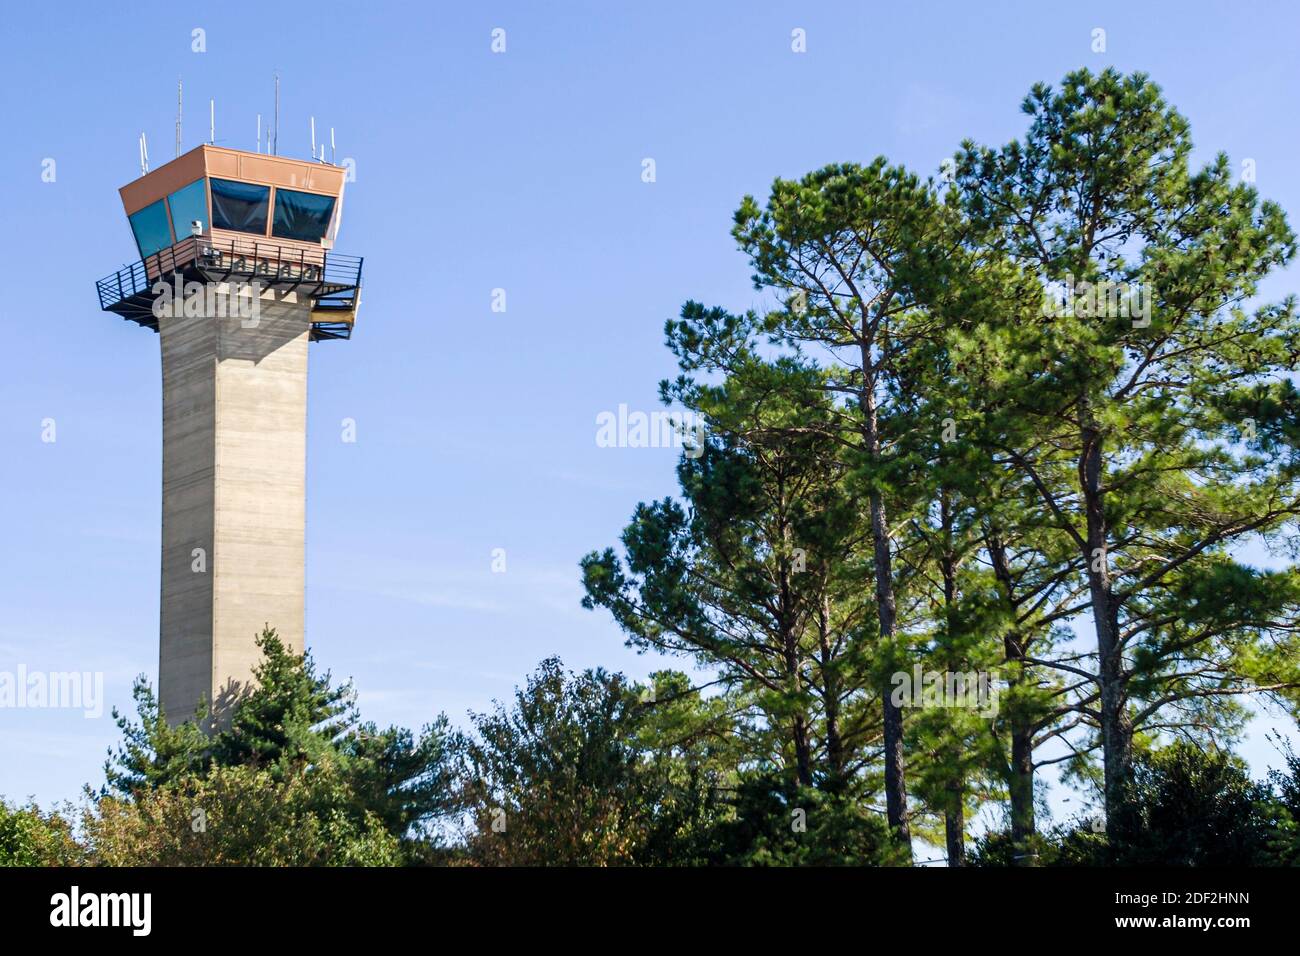 Huntsville Alabama,Airport air traffic control tower building, Stock Photo